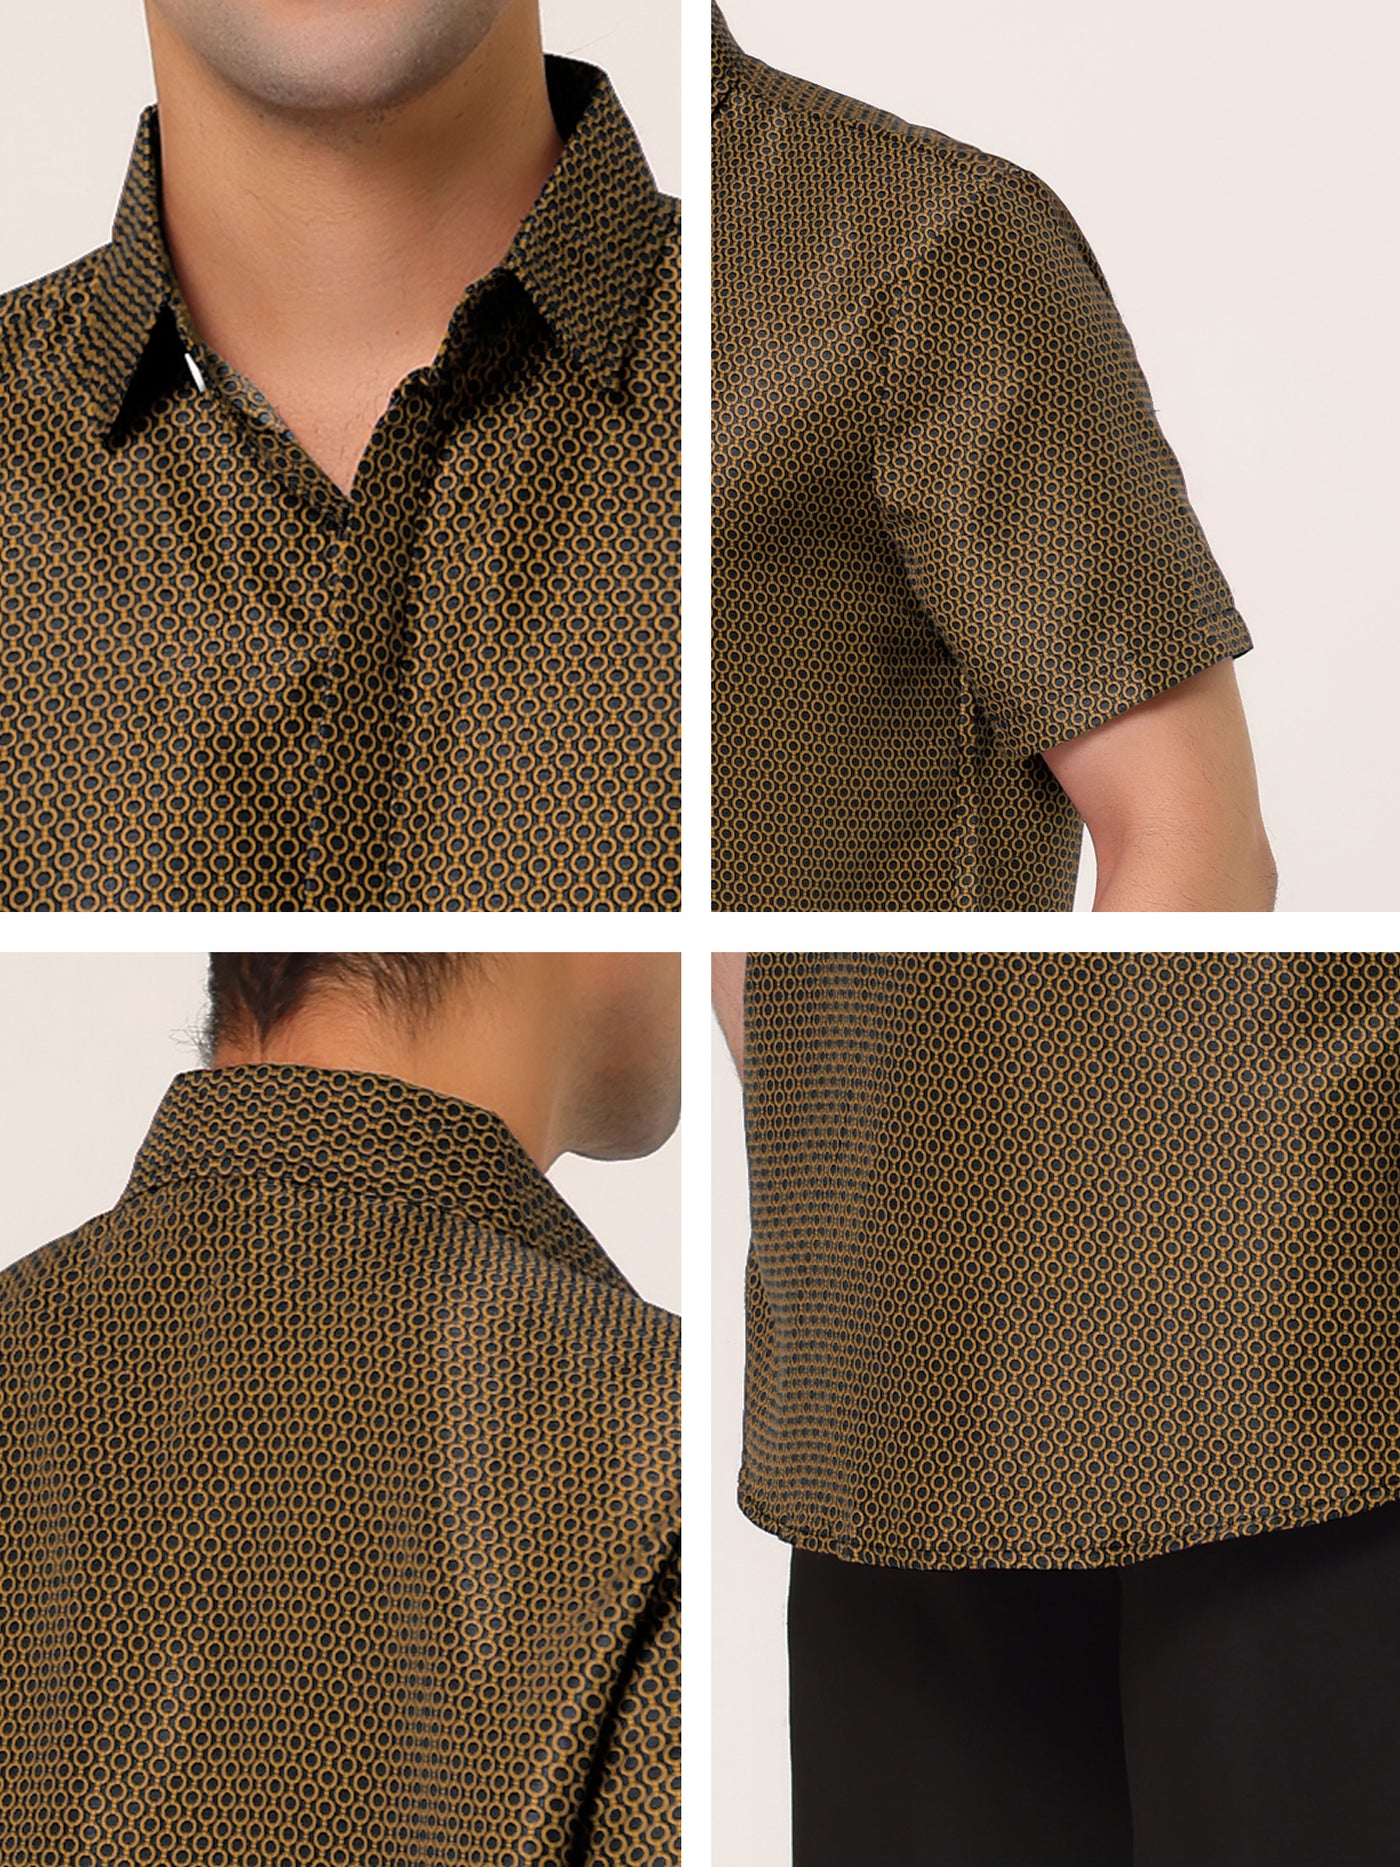 Bublédon Button Short Sleeve Polka Dot Printed Dress Shirts